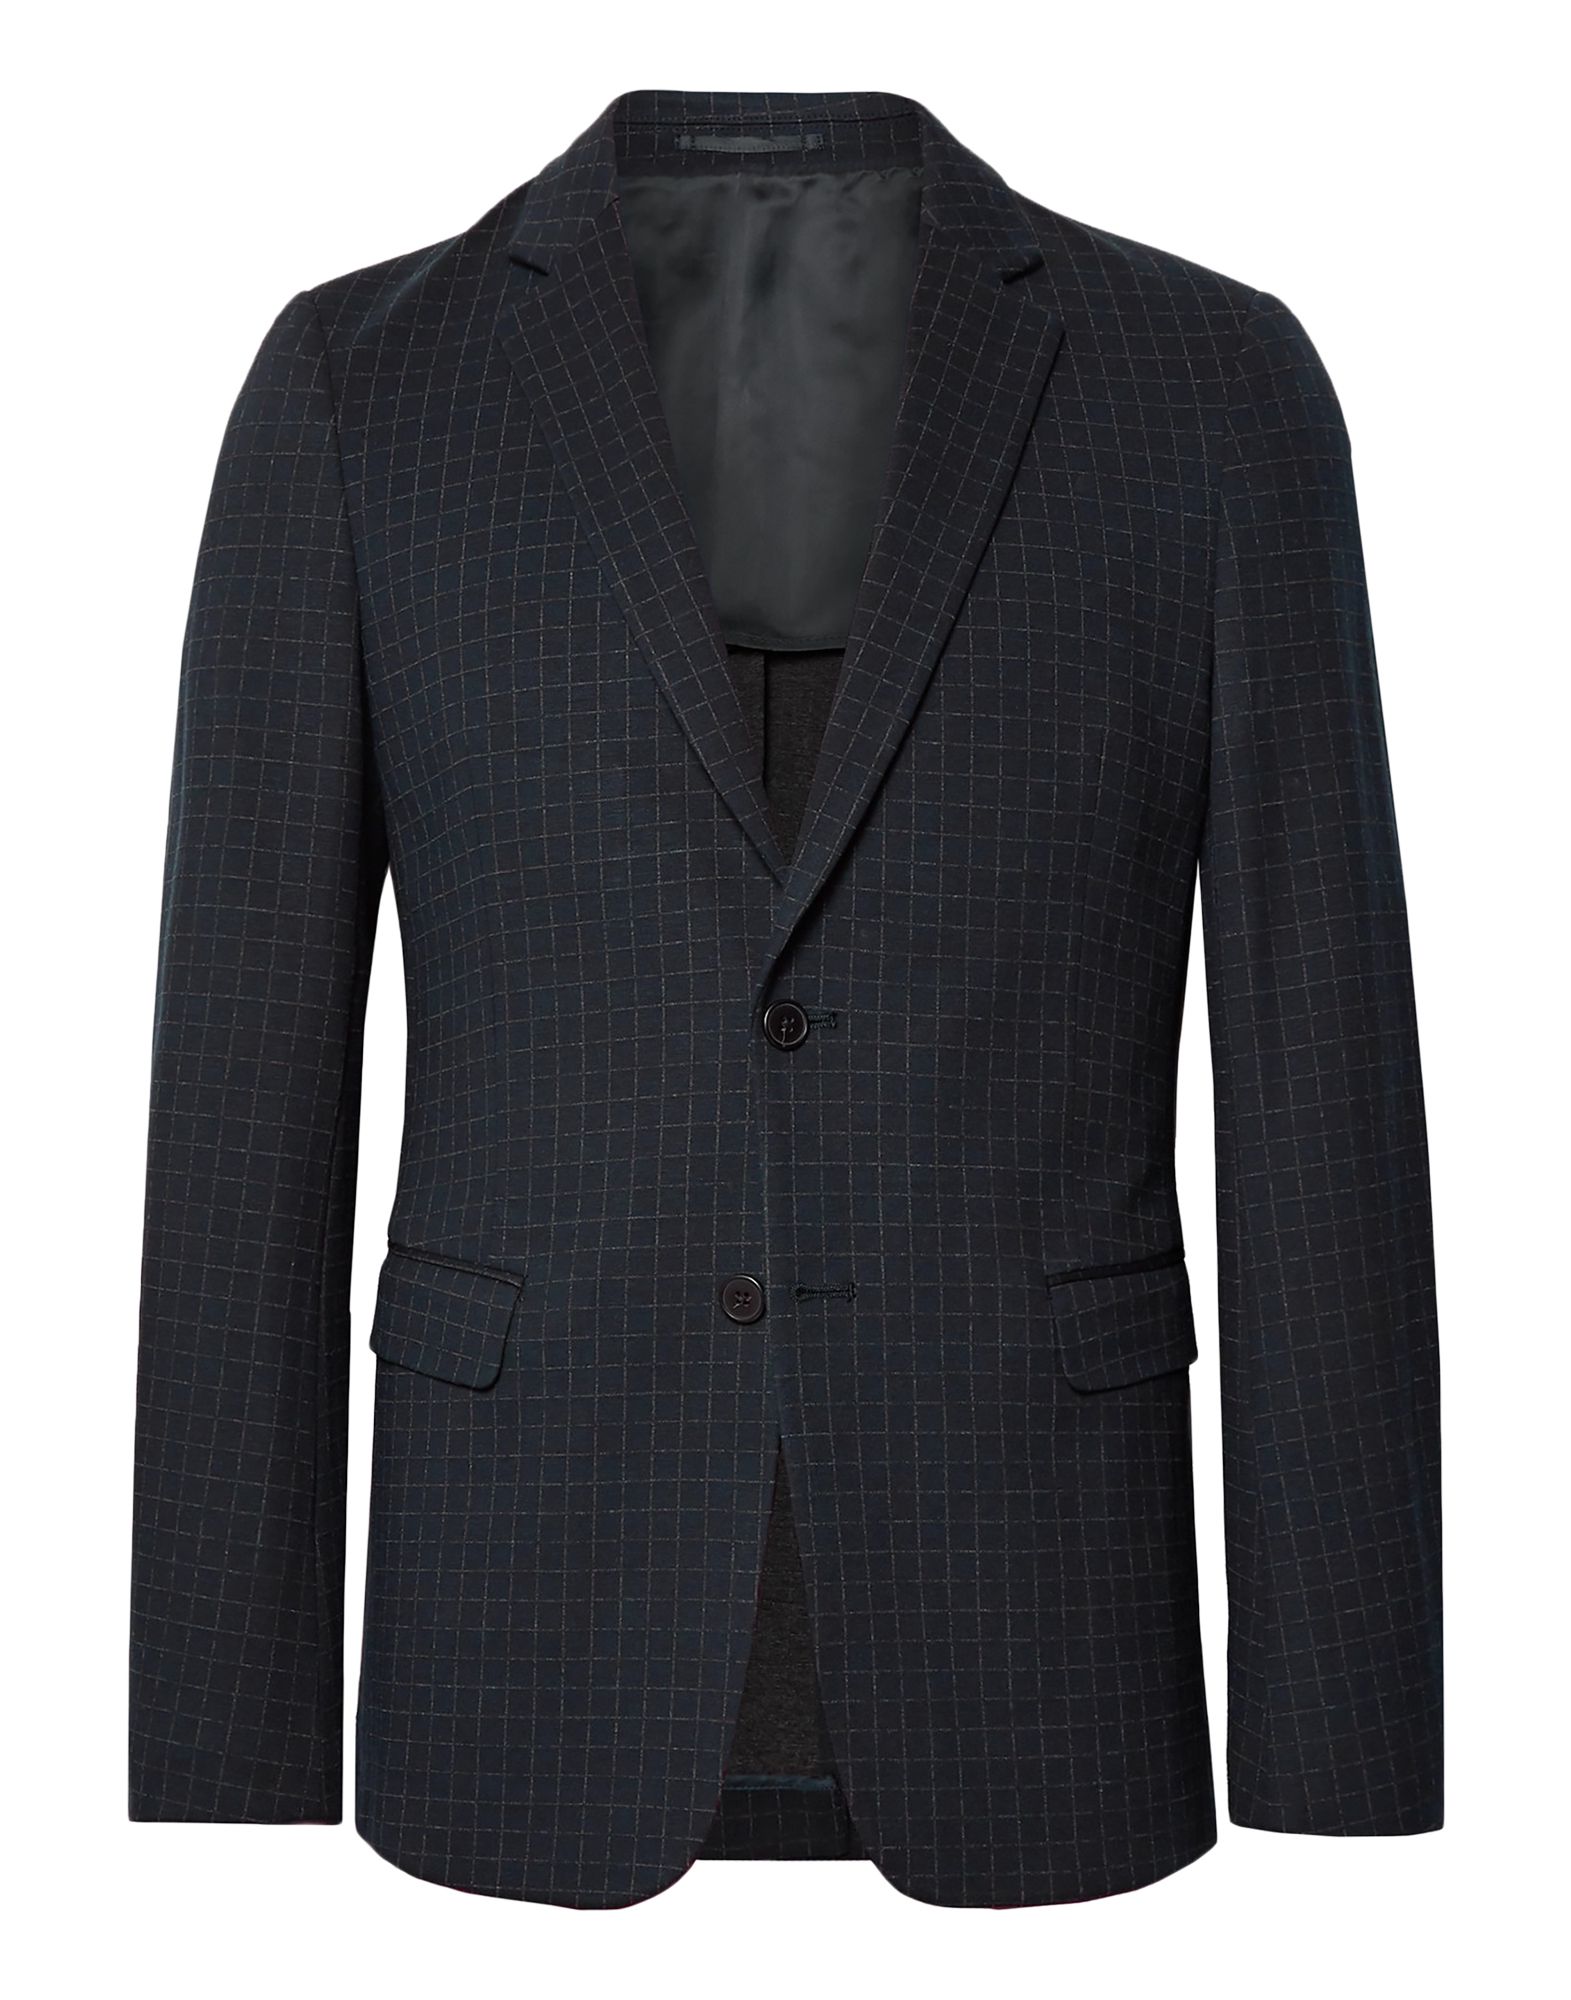 THEORY Suit jackets | Smart Closet